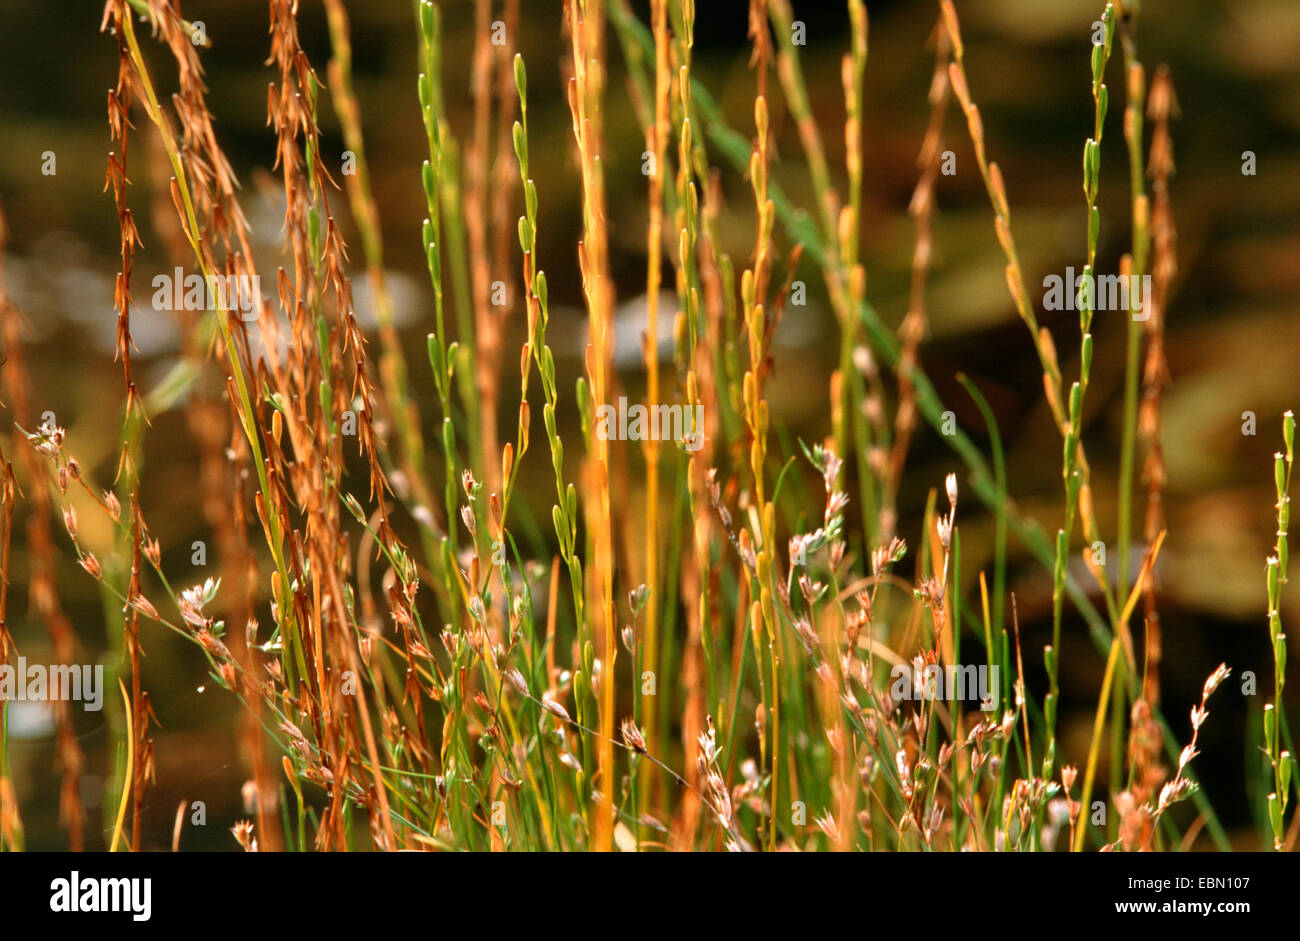 marsh arrowgrass, slender bog arrow-grass (Triglochin palustre), blooming and fruiting, Germany Stock Photo